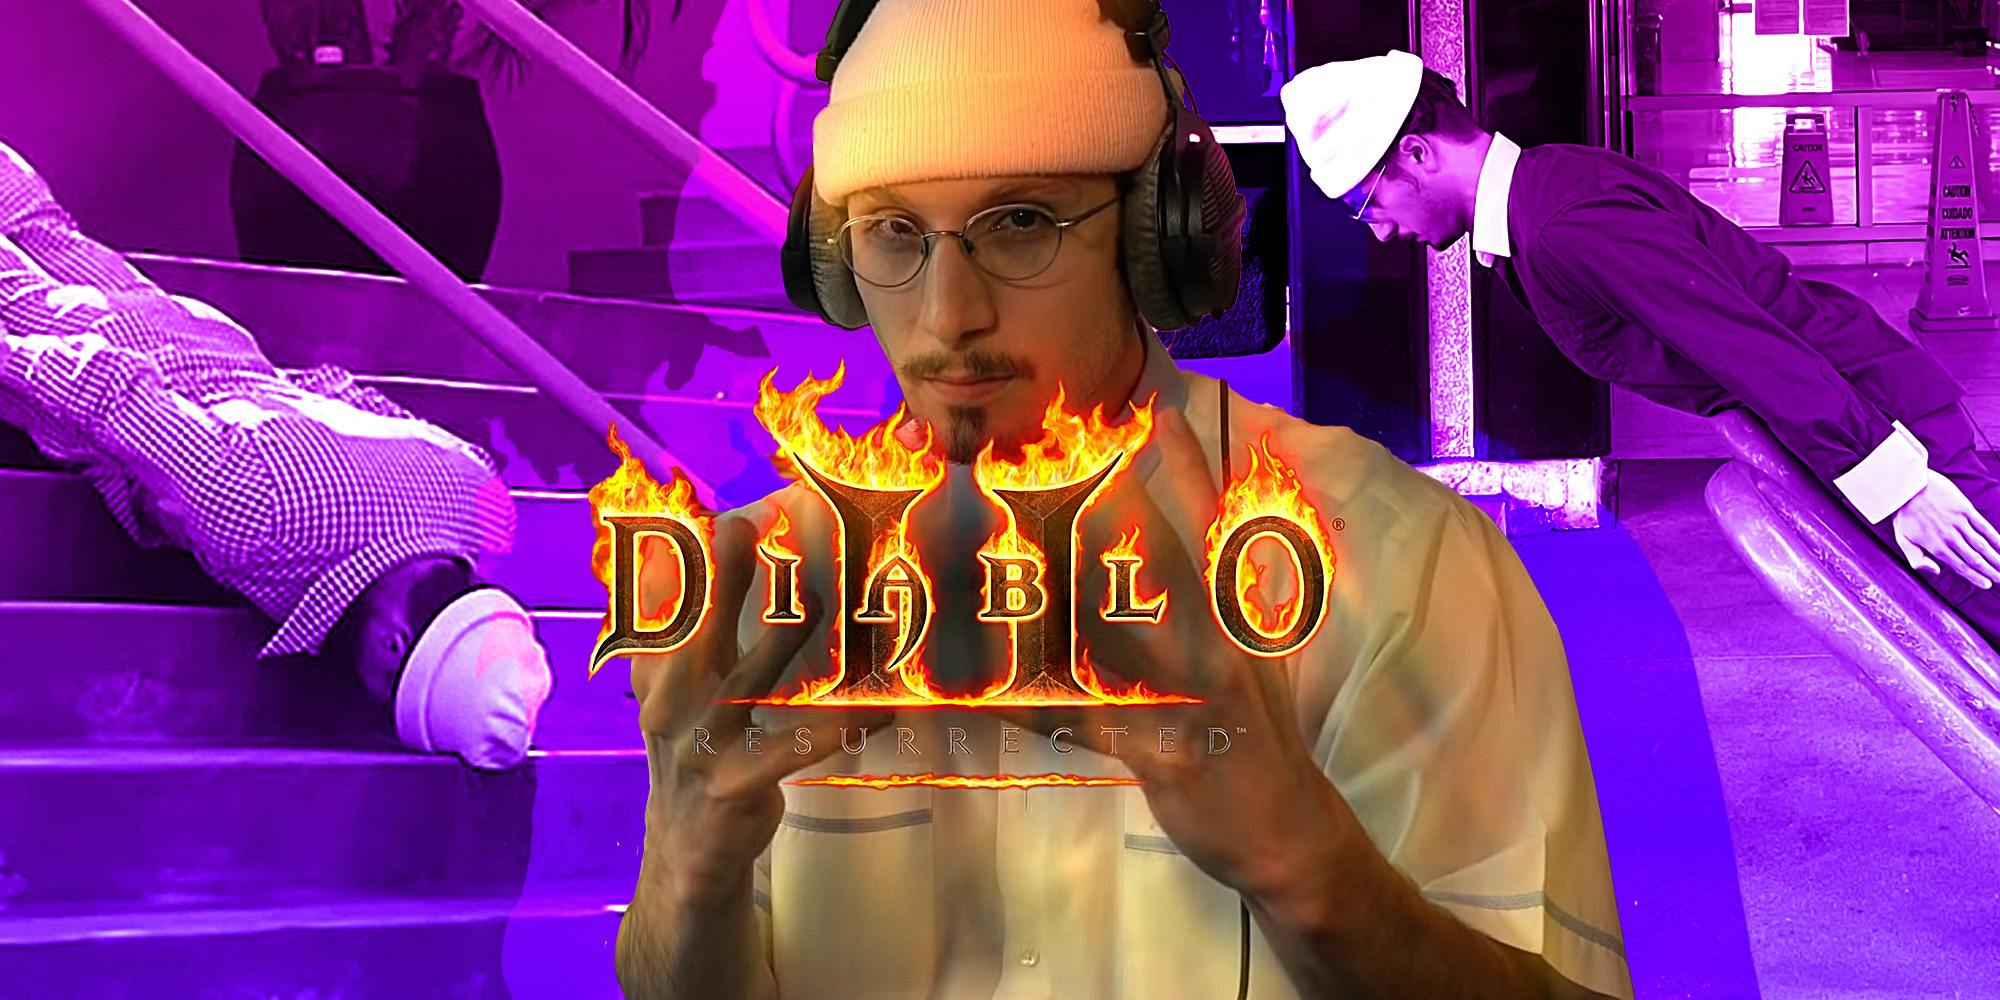 bbno$ planking with "Diablo II" logo